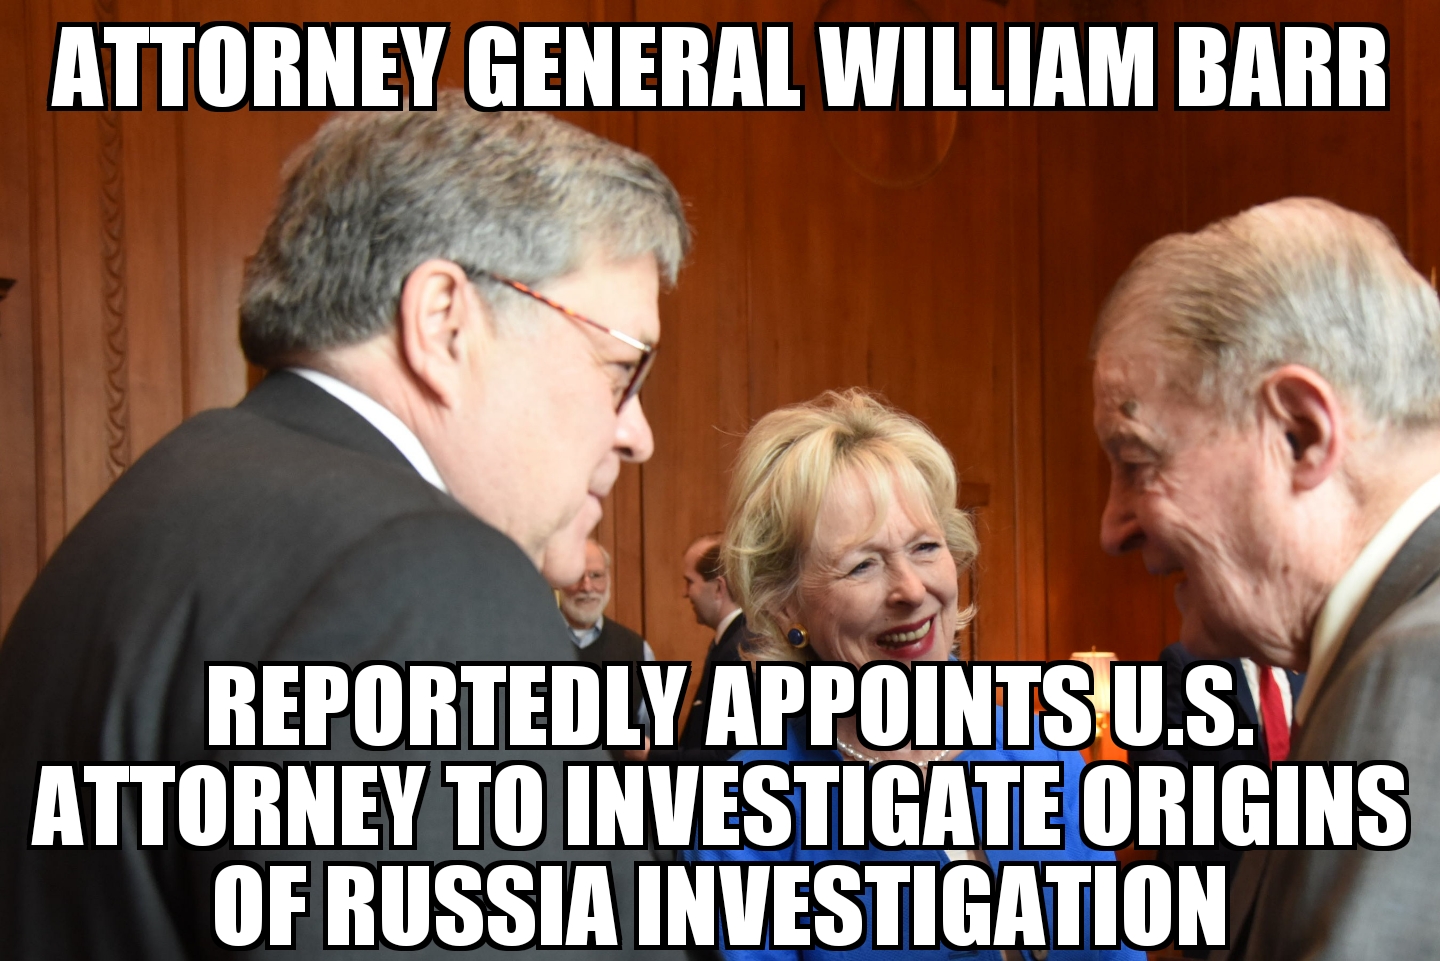 Barr appoints attorney to investigate Russia Investigation